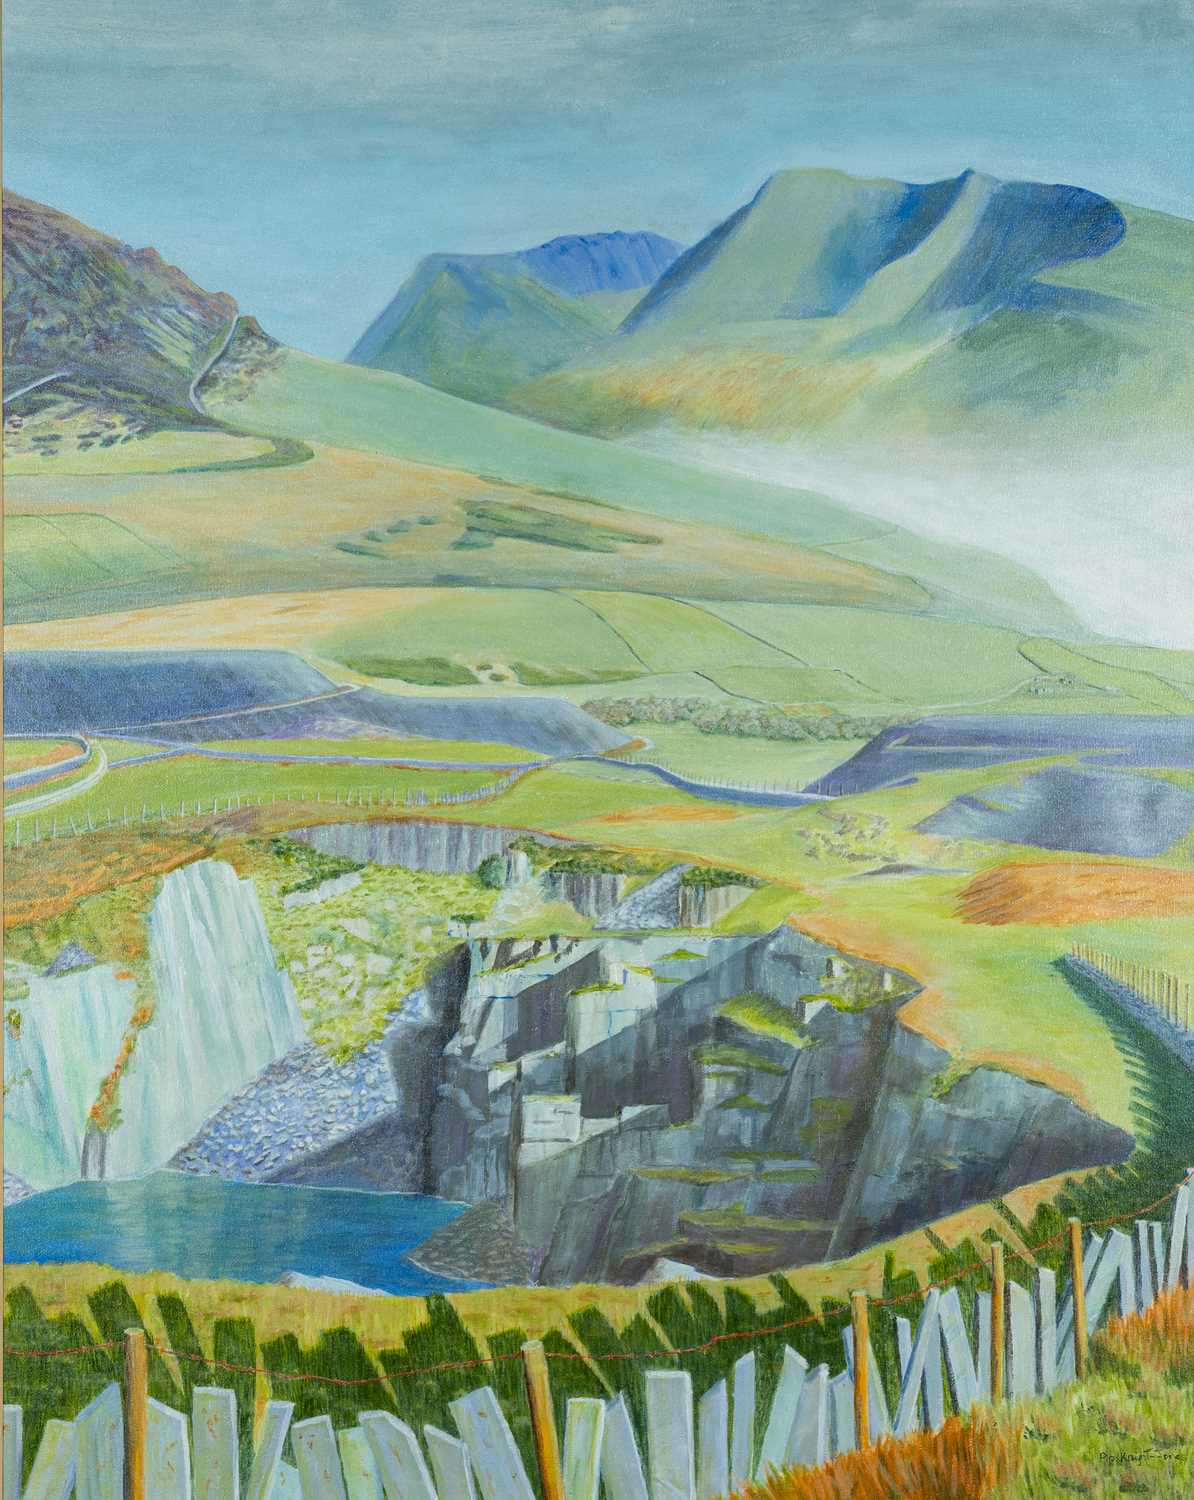 ‡ PIP KNIGHT-JONES (1933-2009) acrylic on canvas - entitled verso, 'Fron, Towards Snowdonia',